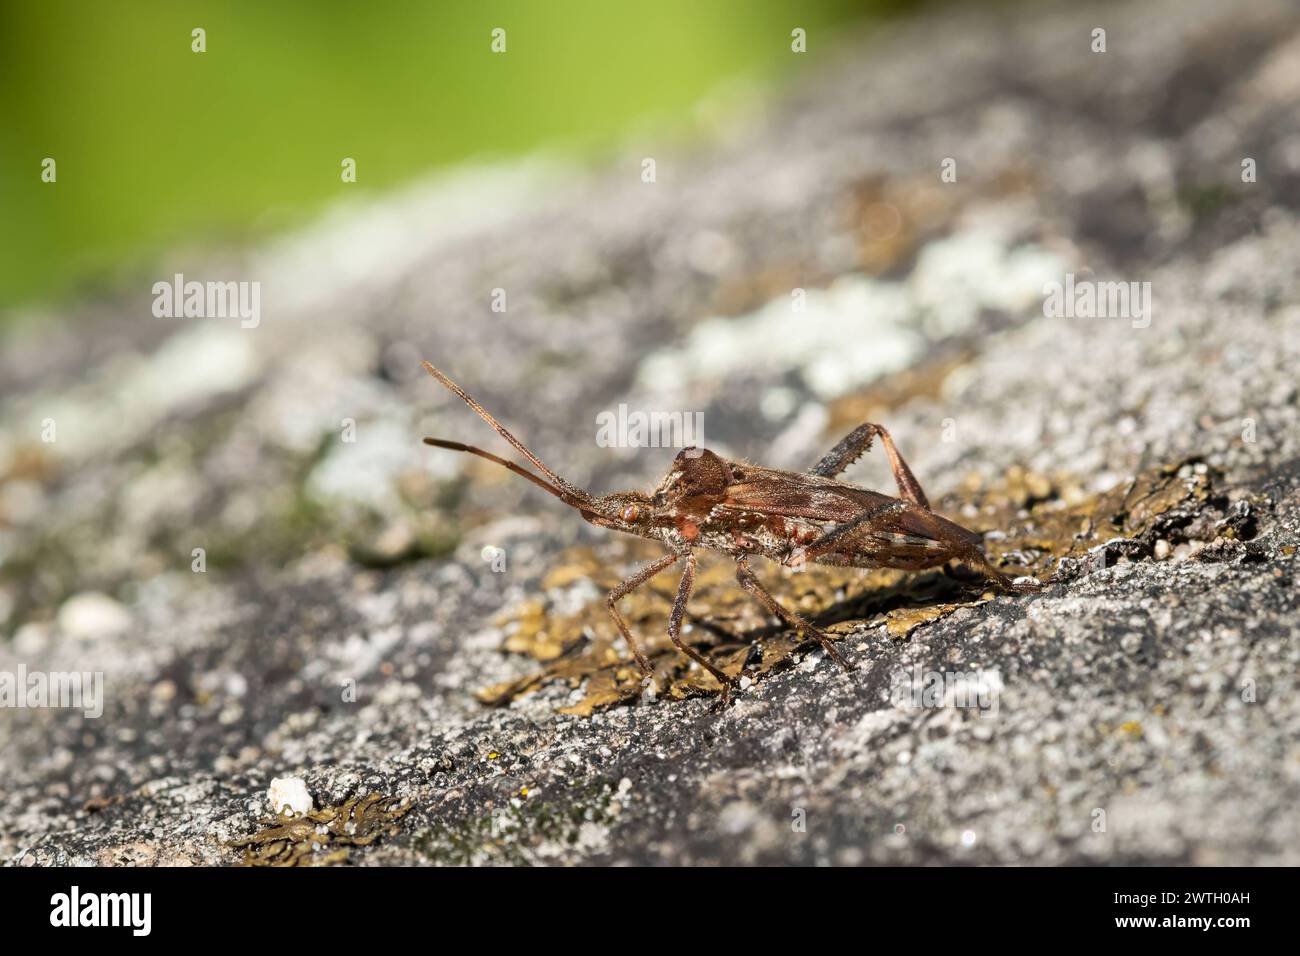 A Western conifer seed bug sitting on a rock, sunny day in autumn Austria Gmünd Austria Stock Photo